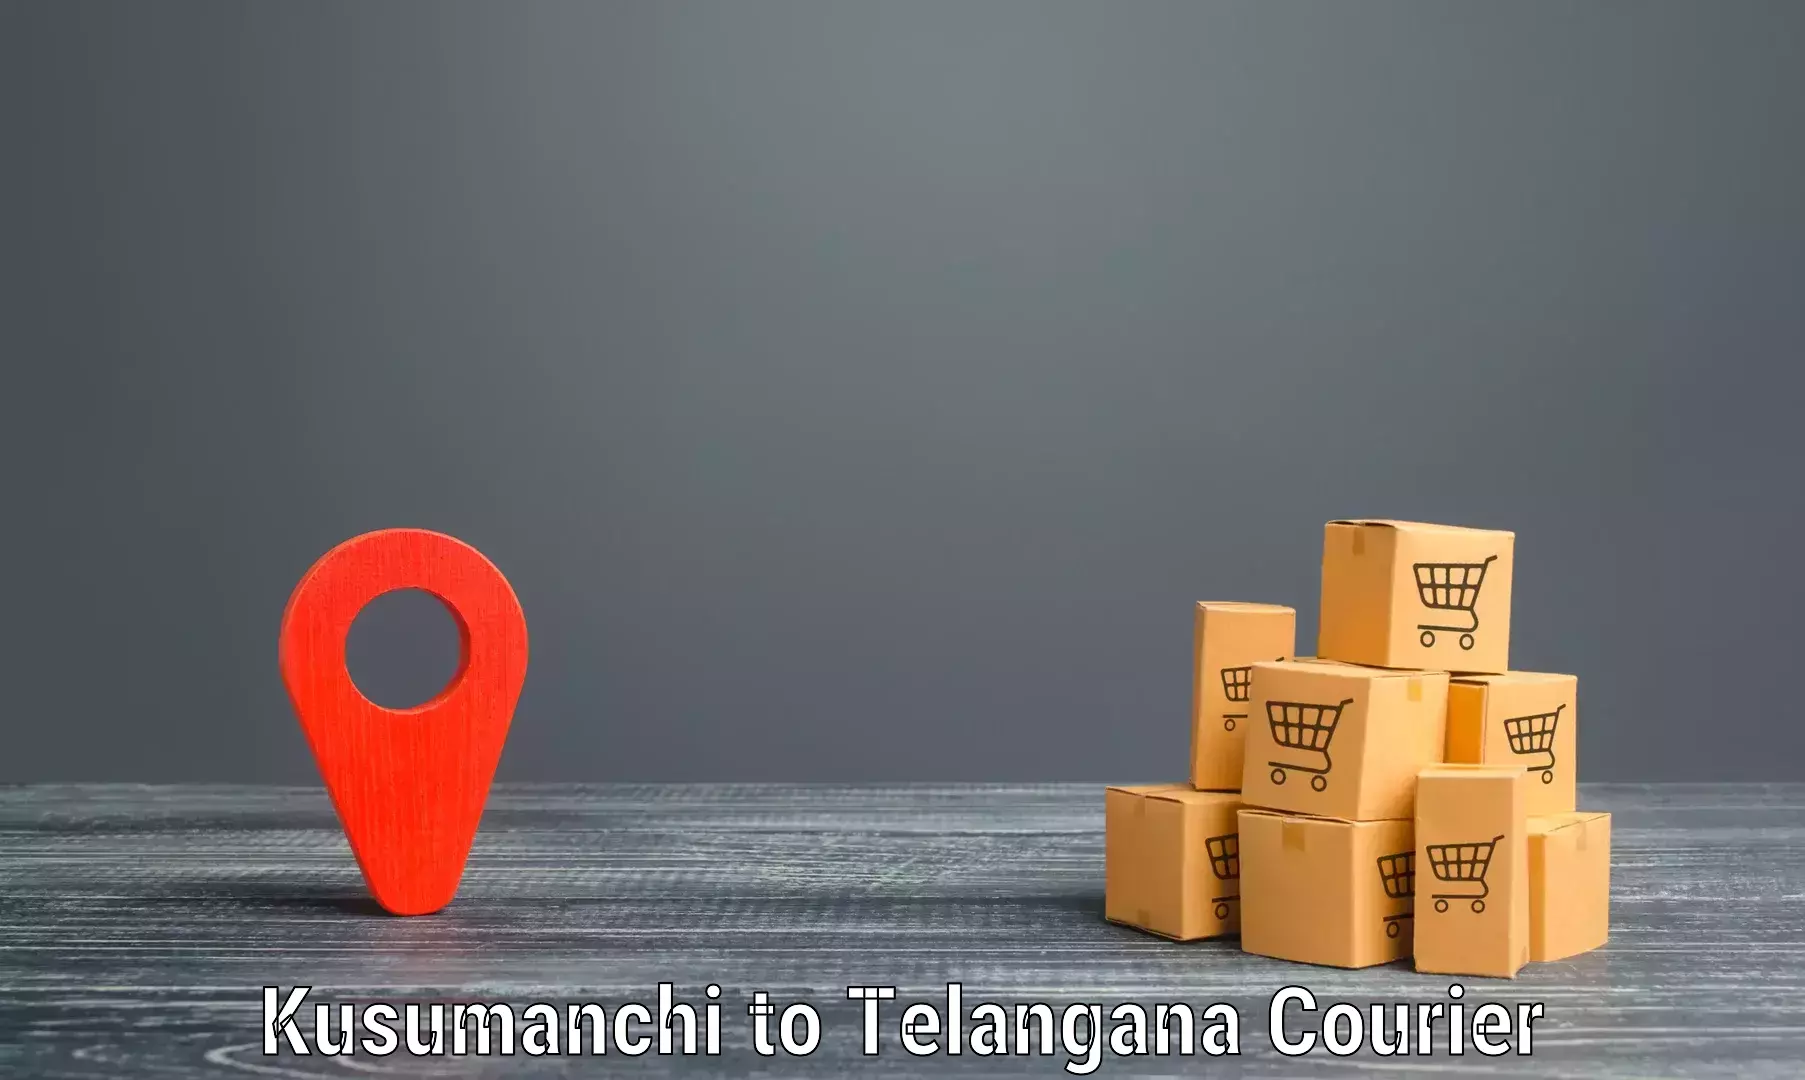 Global logistics network Kusumanchi to Gollapalli